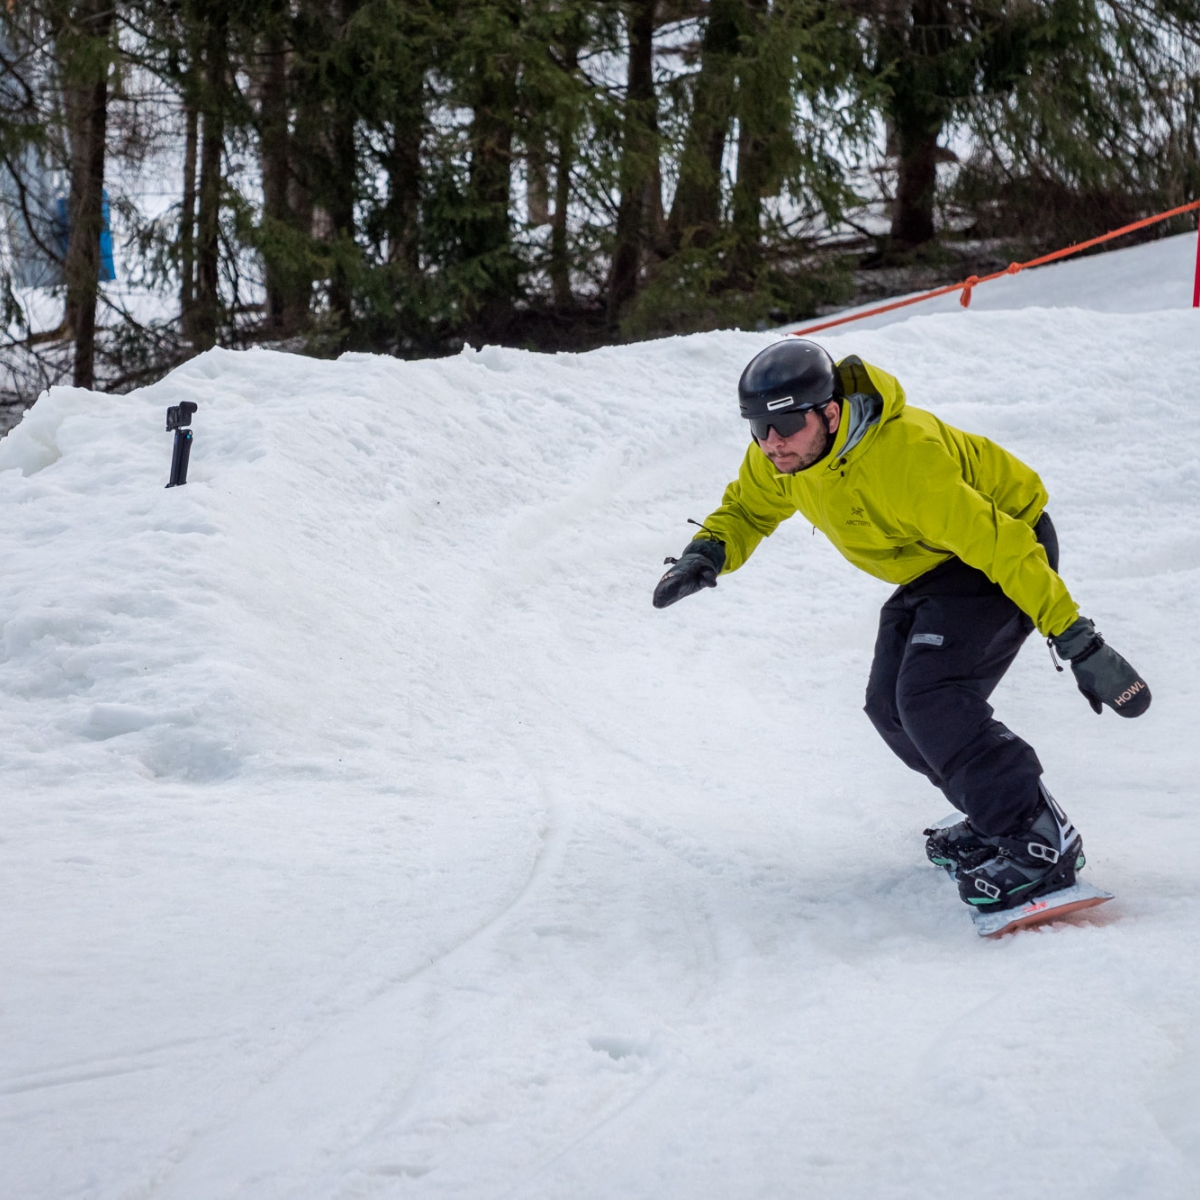 Snowboarder at Holiday Valley Resort